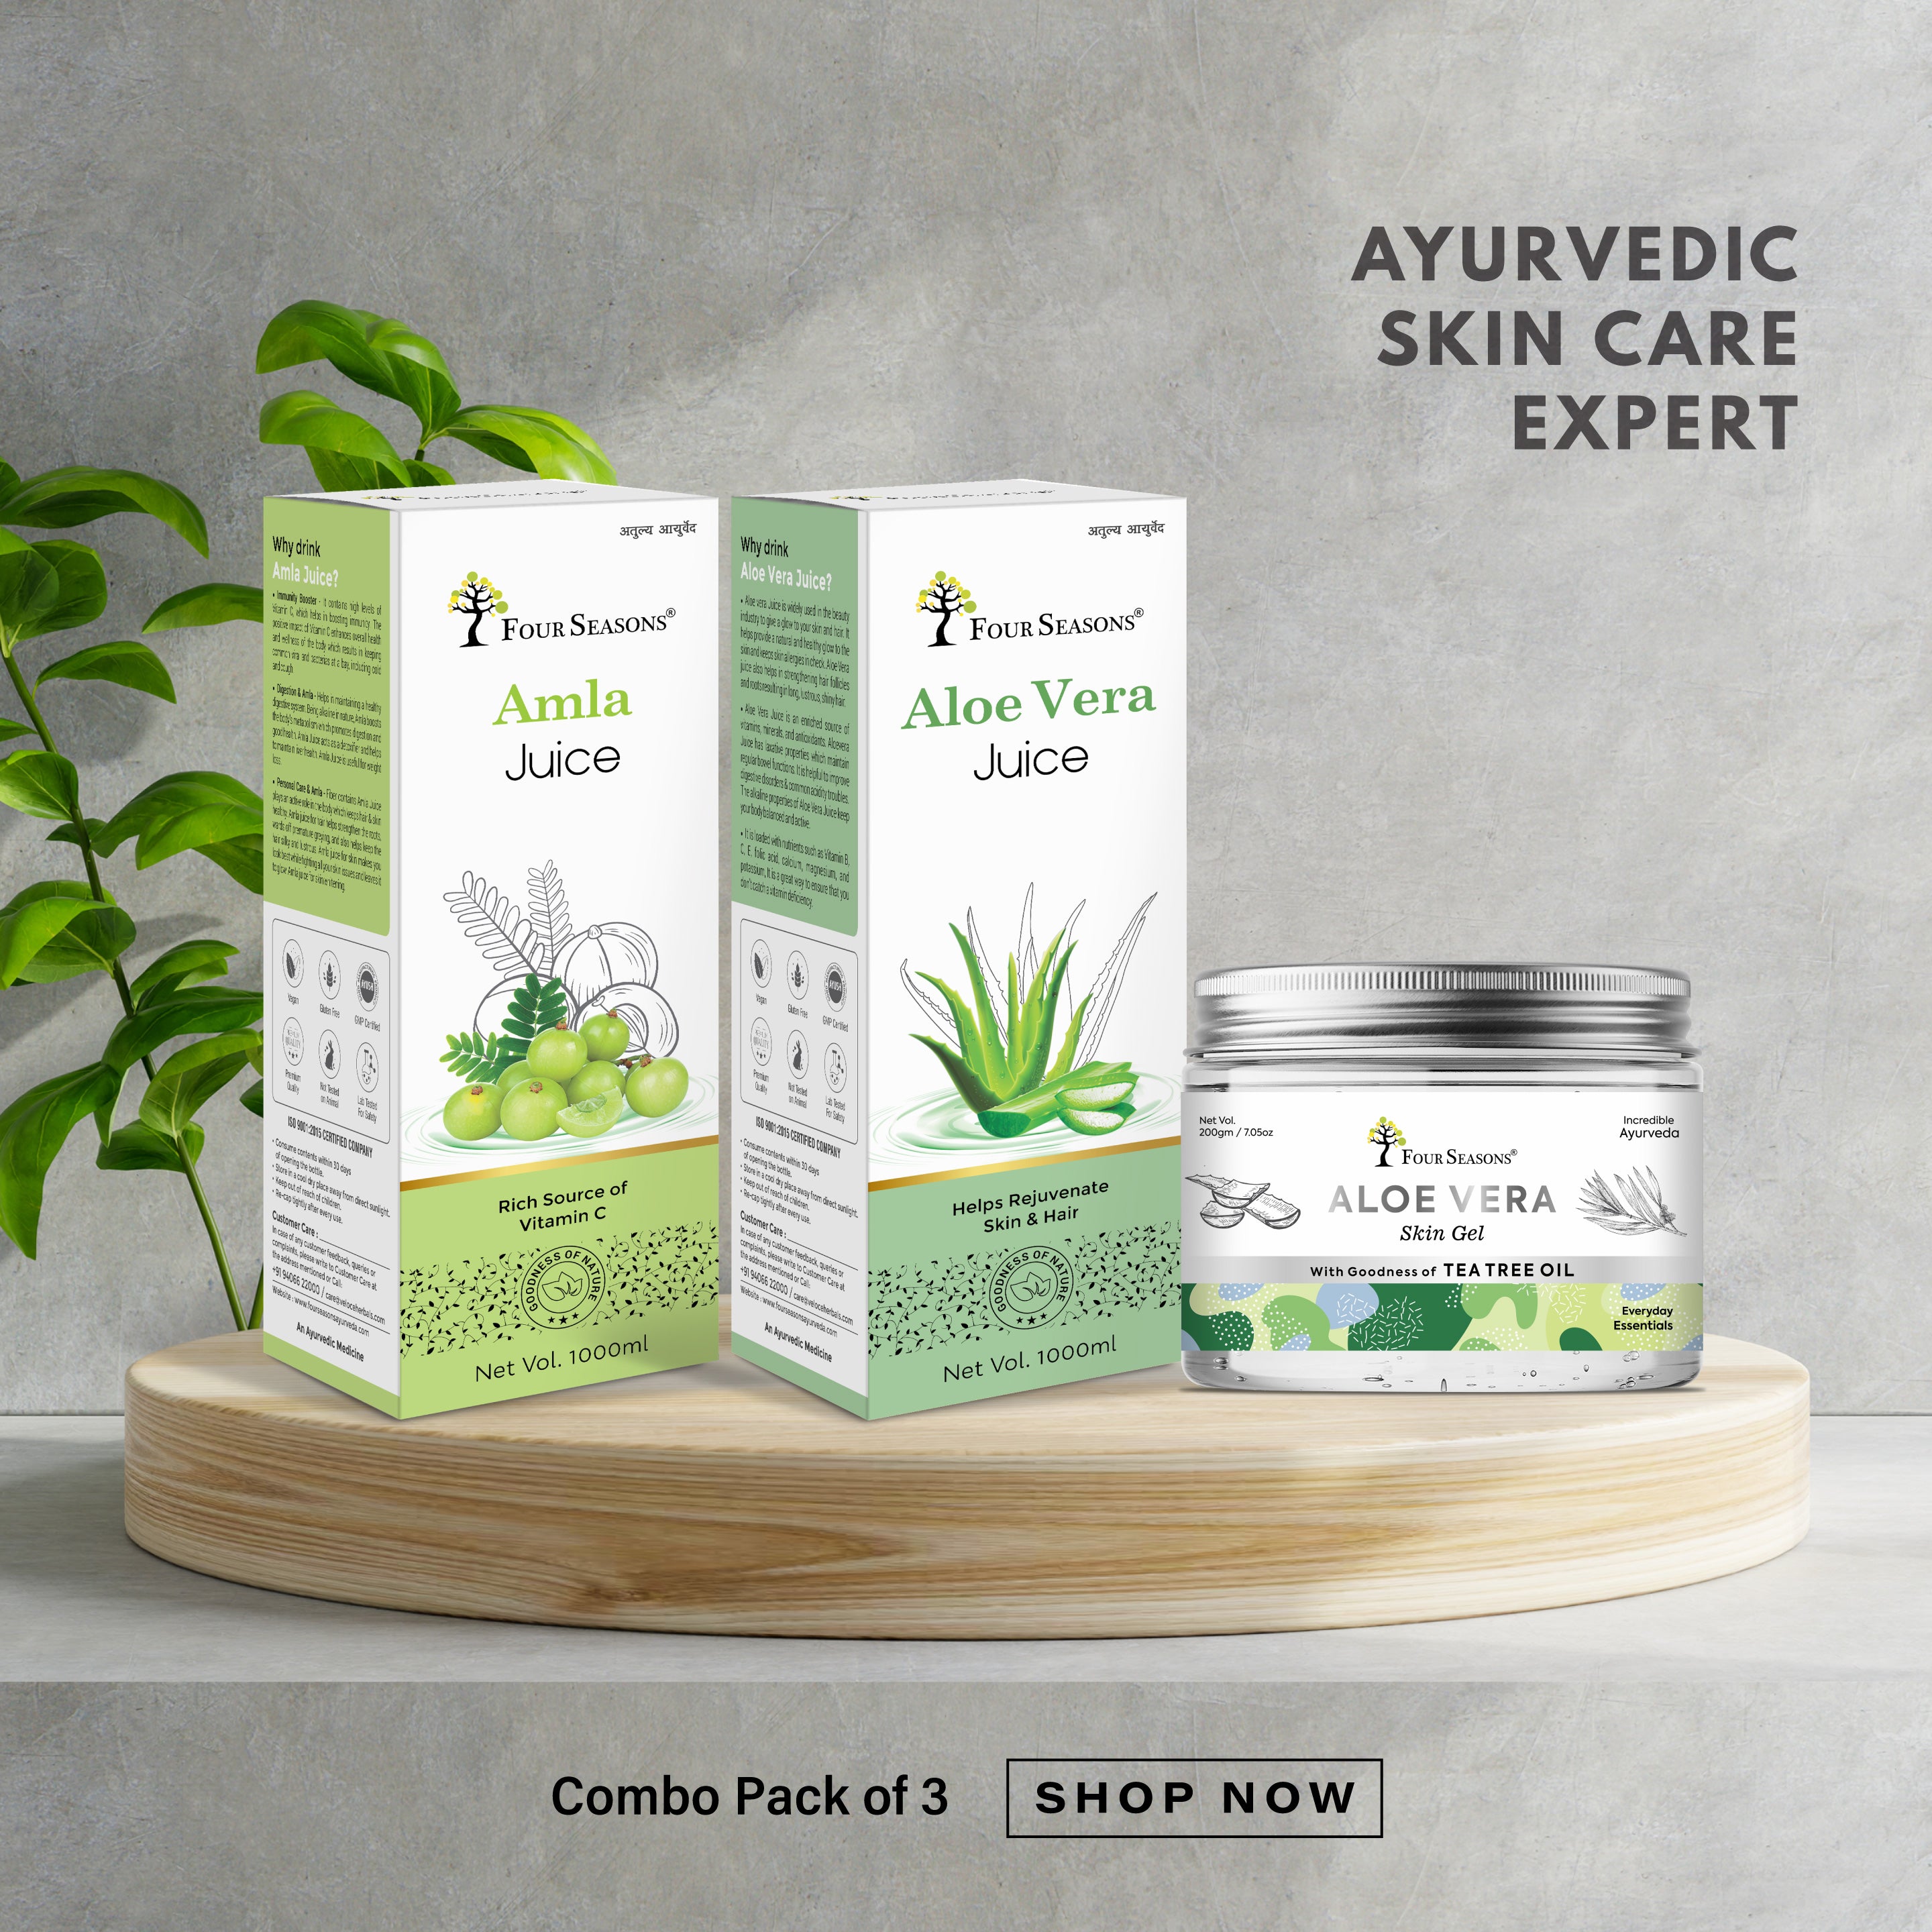 Ayurvedic Skin Care Expert 2